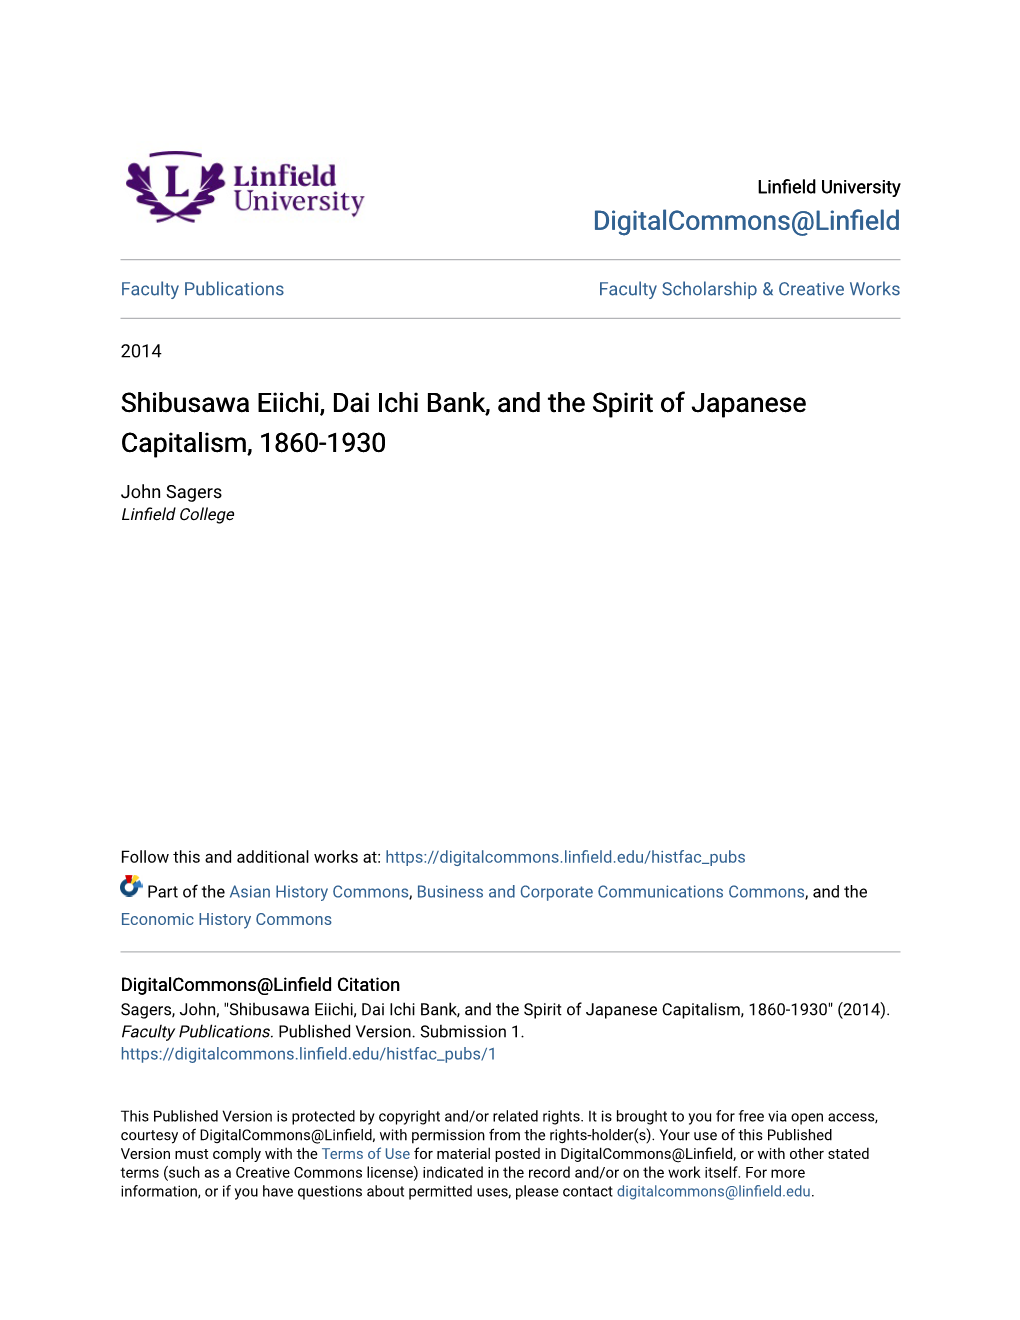 Shibusawa Eiichi, Dai Ichi Bank, and the Spirit of Japanese Capitalism, 1860-1930